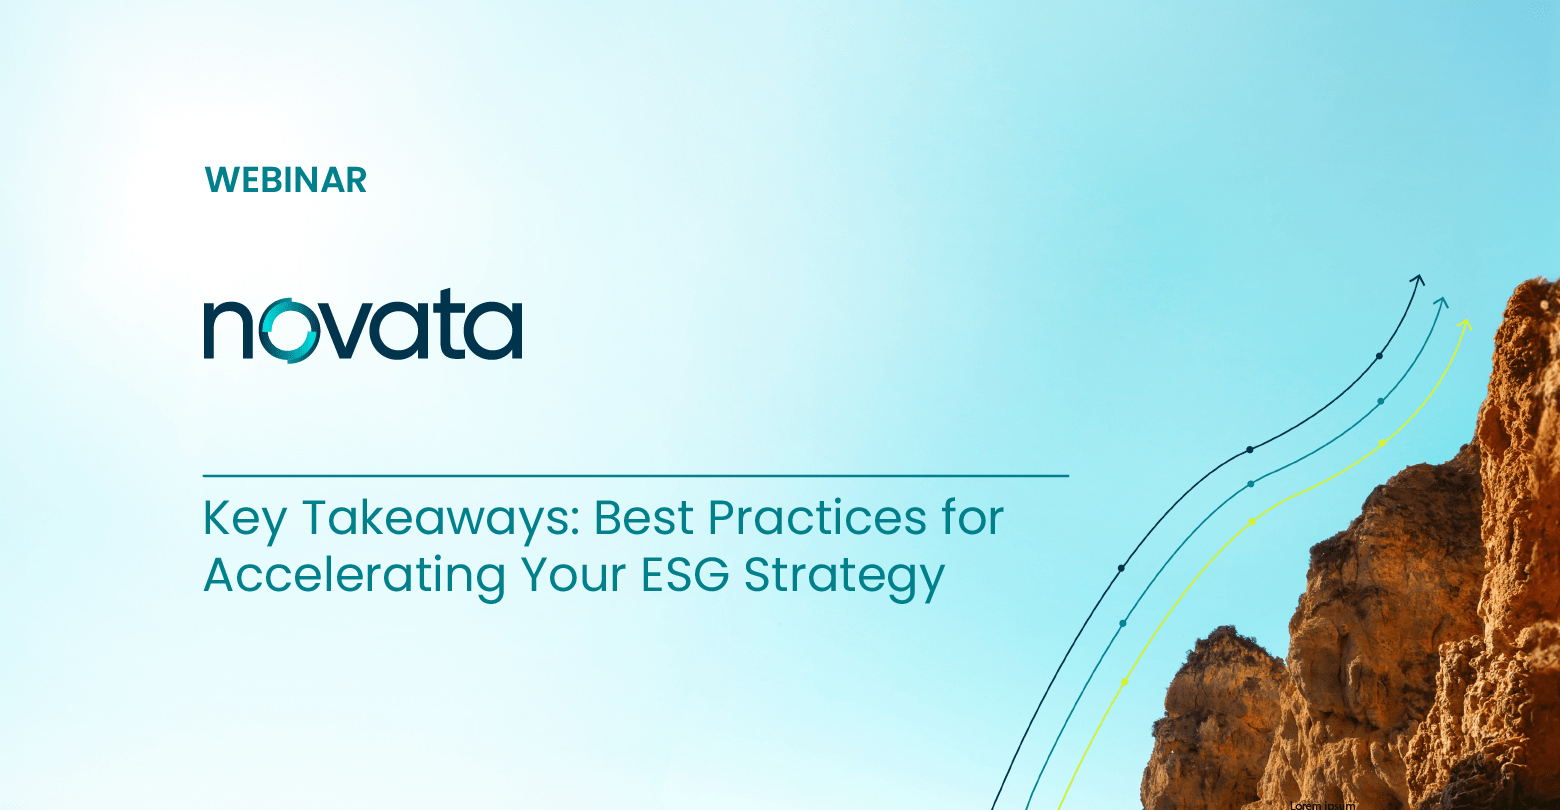 Novata Webinar Key Takeaways: Best Practices for Accelerating Your ESG Strategy